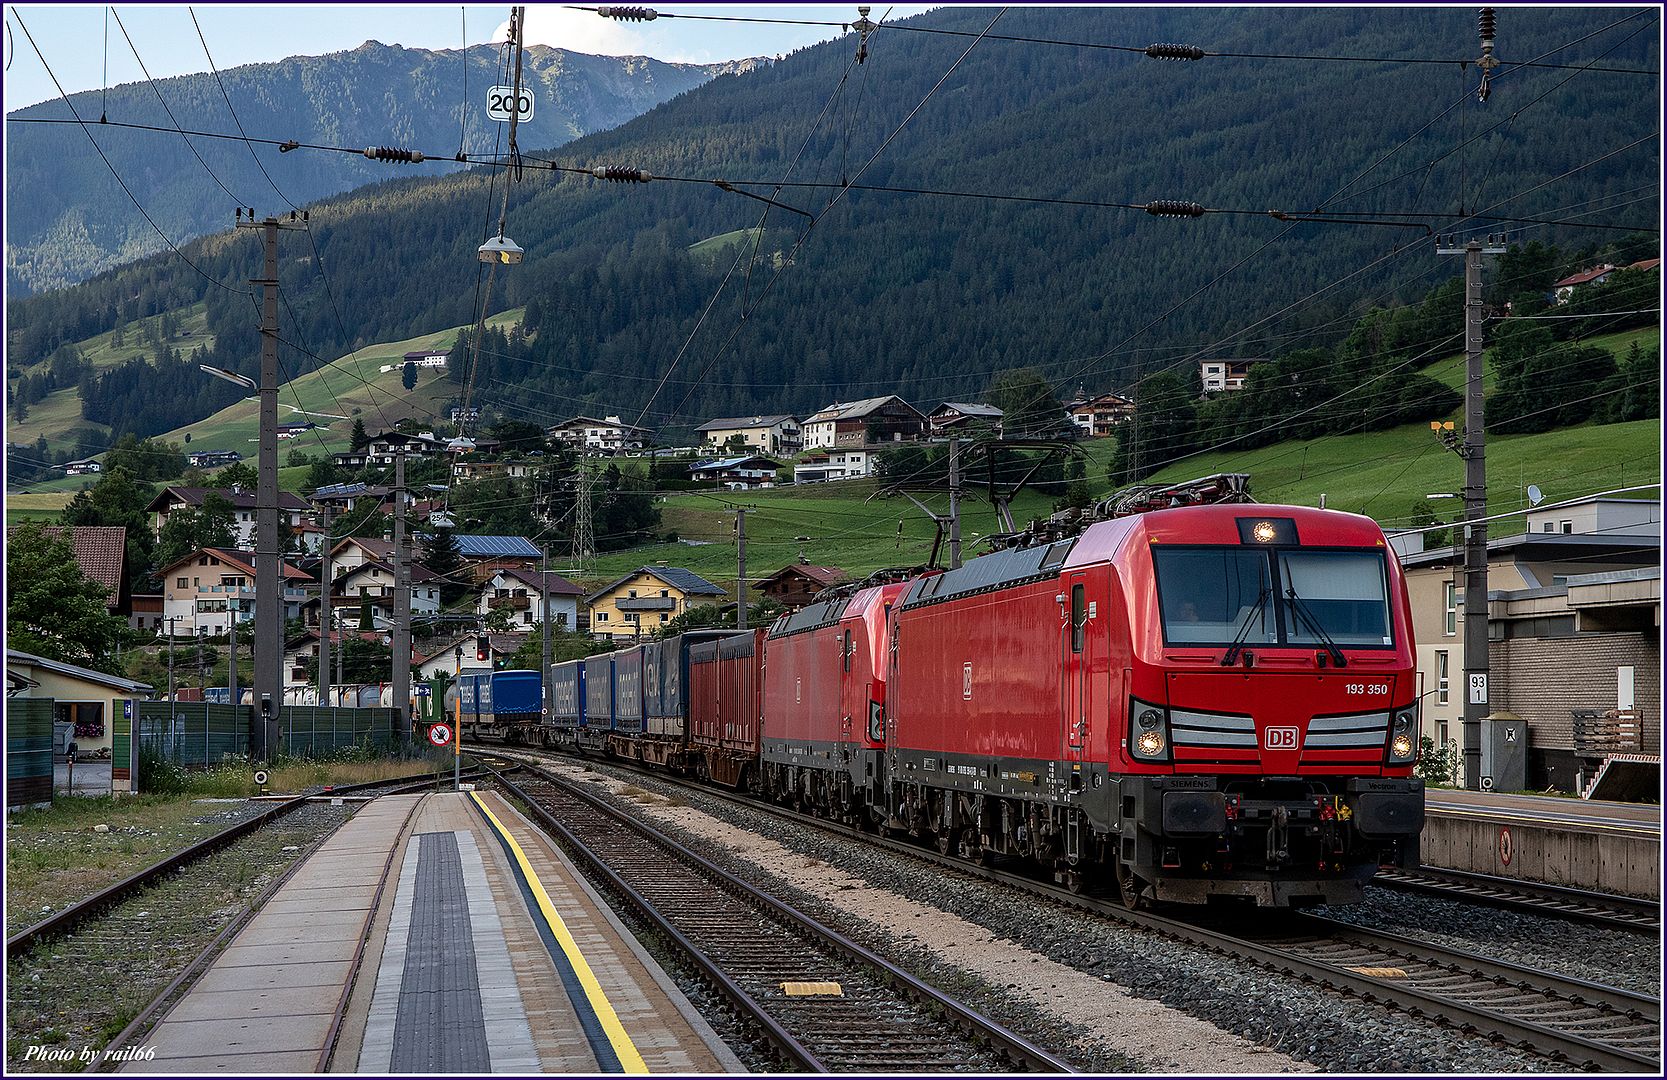 https://i51.photobucket.com/albums/f385/rail66_1/westbahn/nebenstrecken/brennerbahn/301_02_00067_zps9z1xje0q.jpg